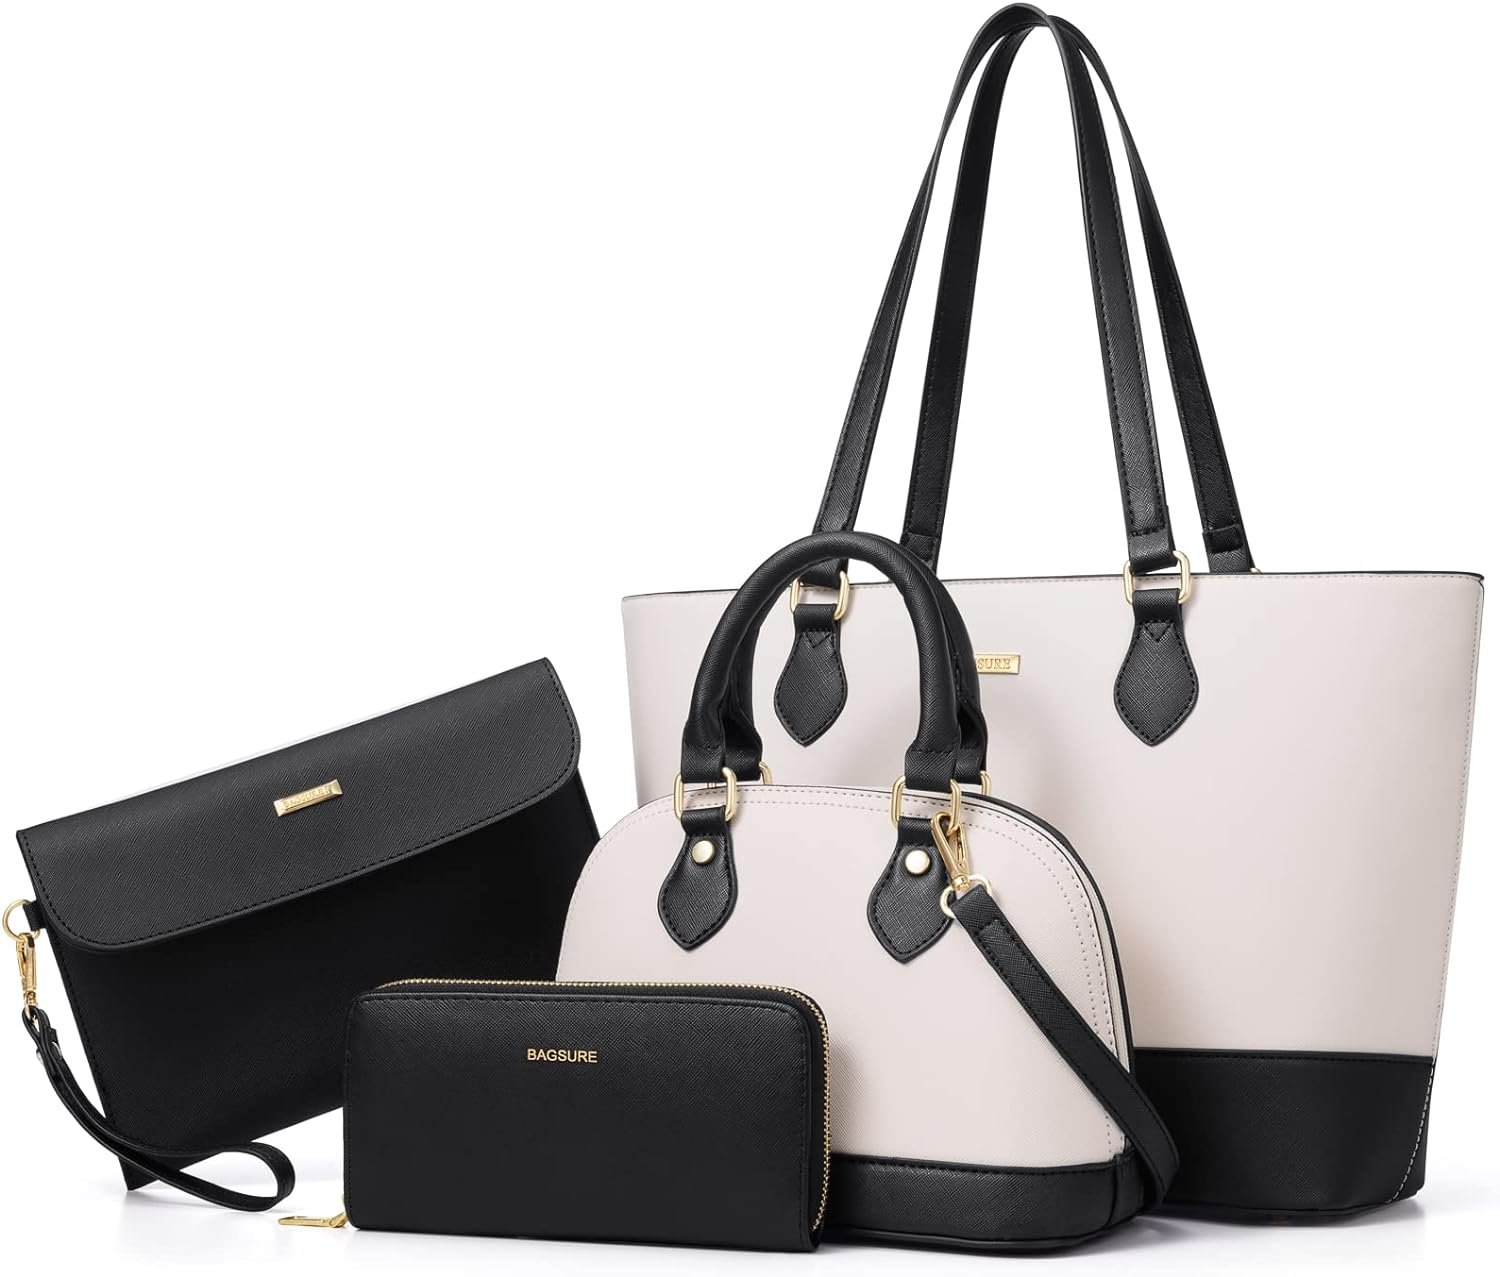 4PCS Women Fashion Handbags Purses Review